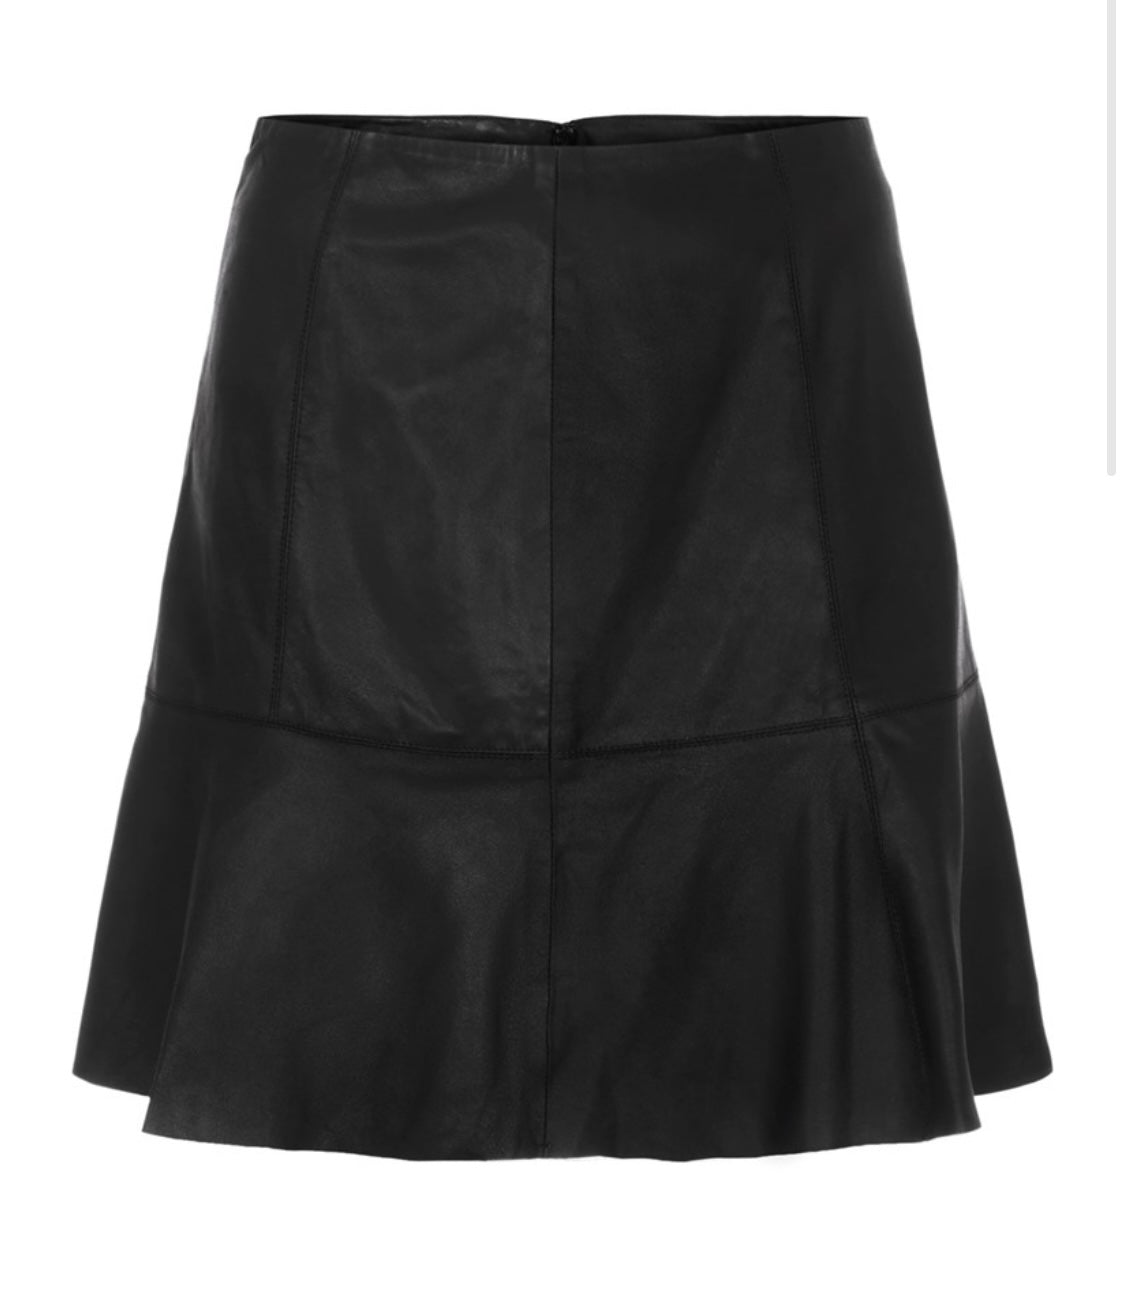 YASCOLLY Napoleon Leather Skirt Black